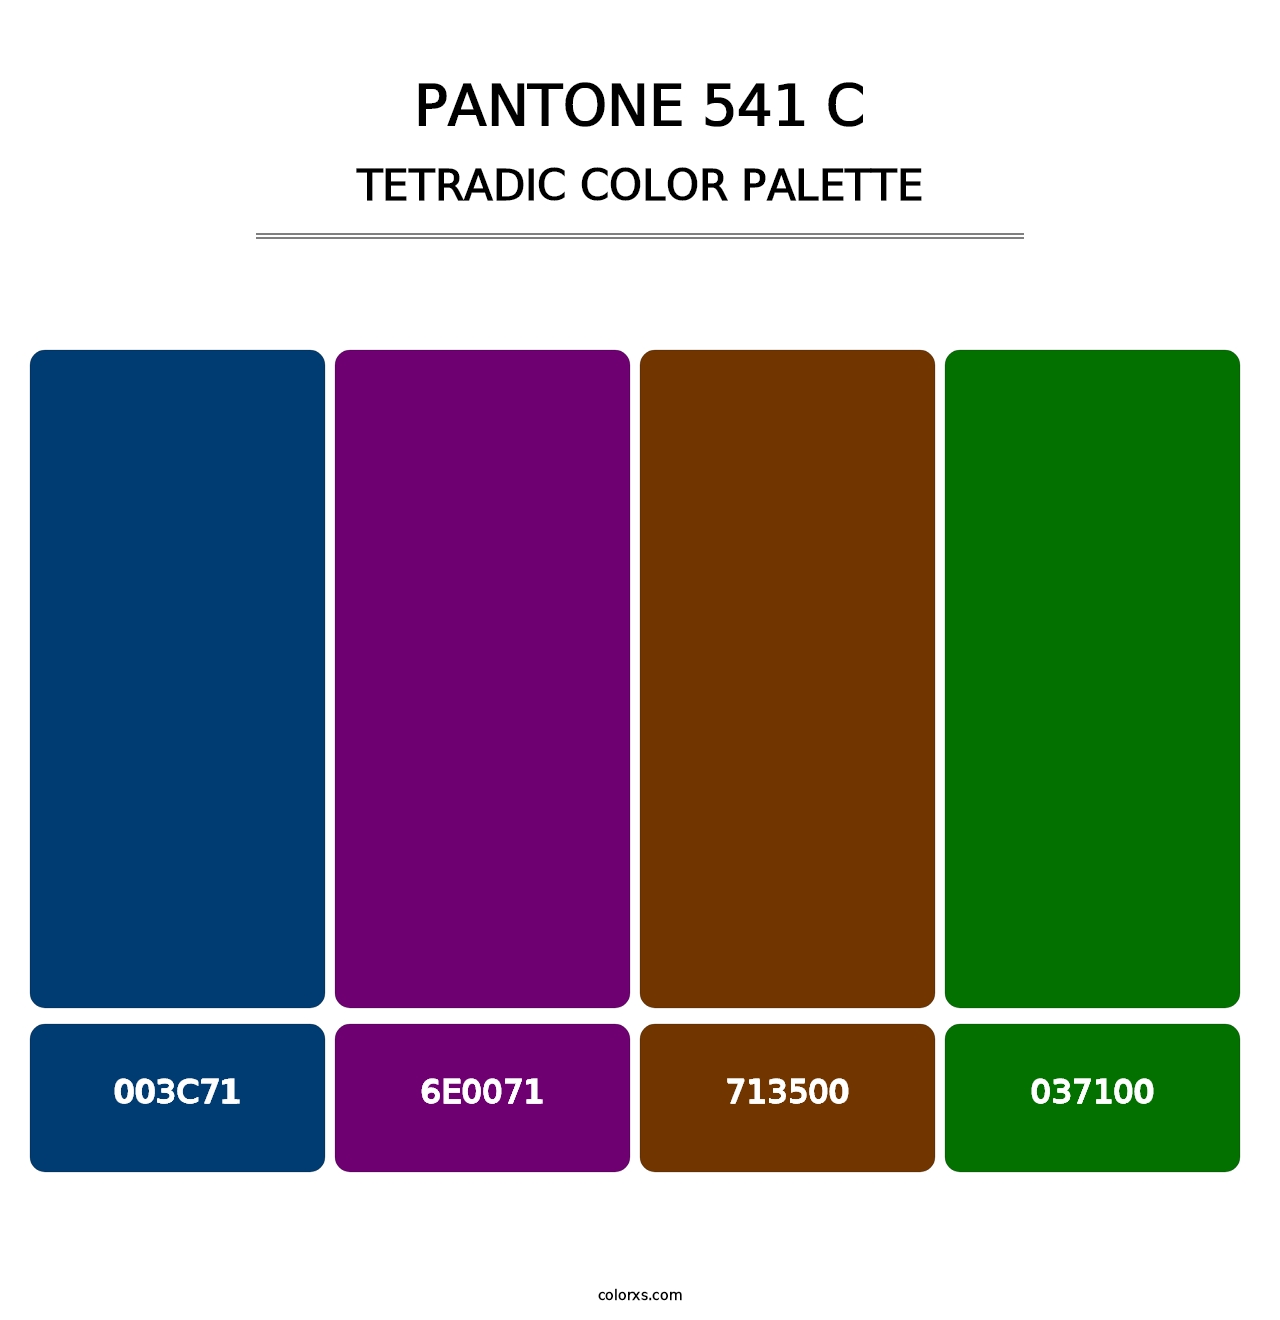 PANTONE 541 C - Tetradic Color Palette